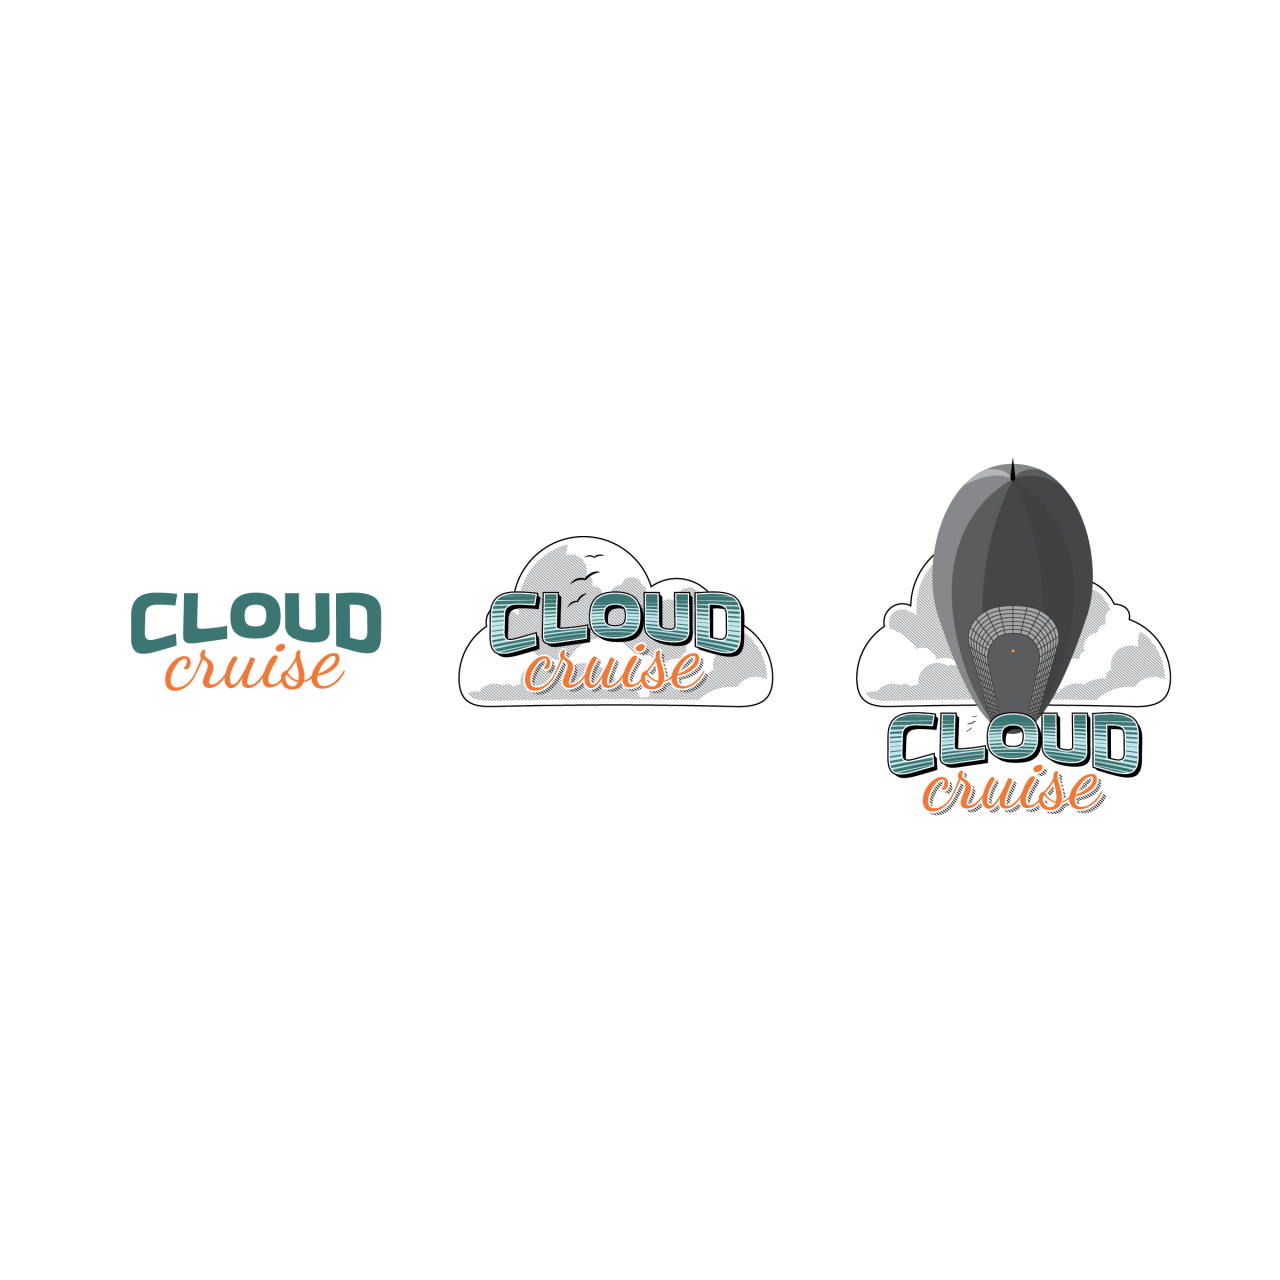 Image of Cloud Cruise logo